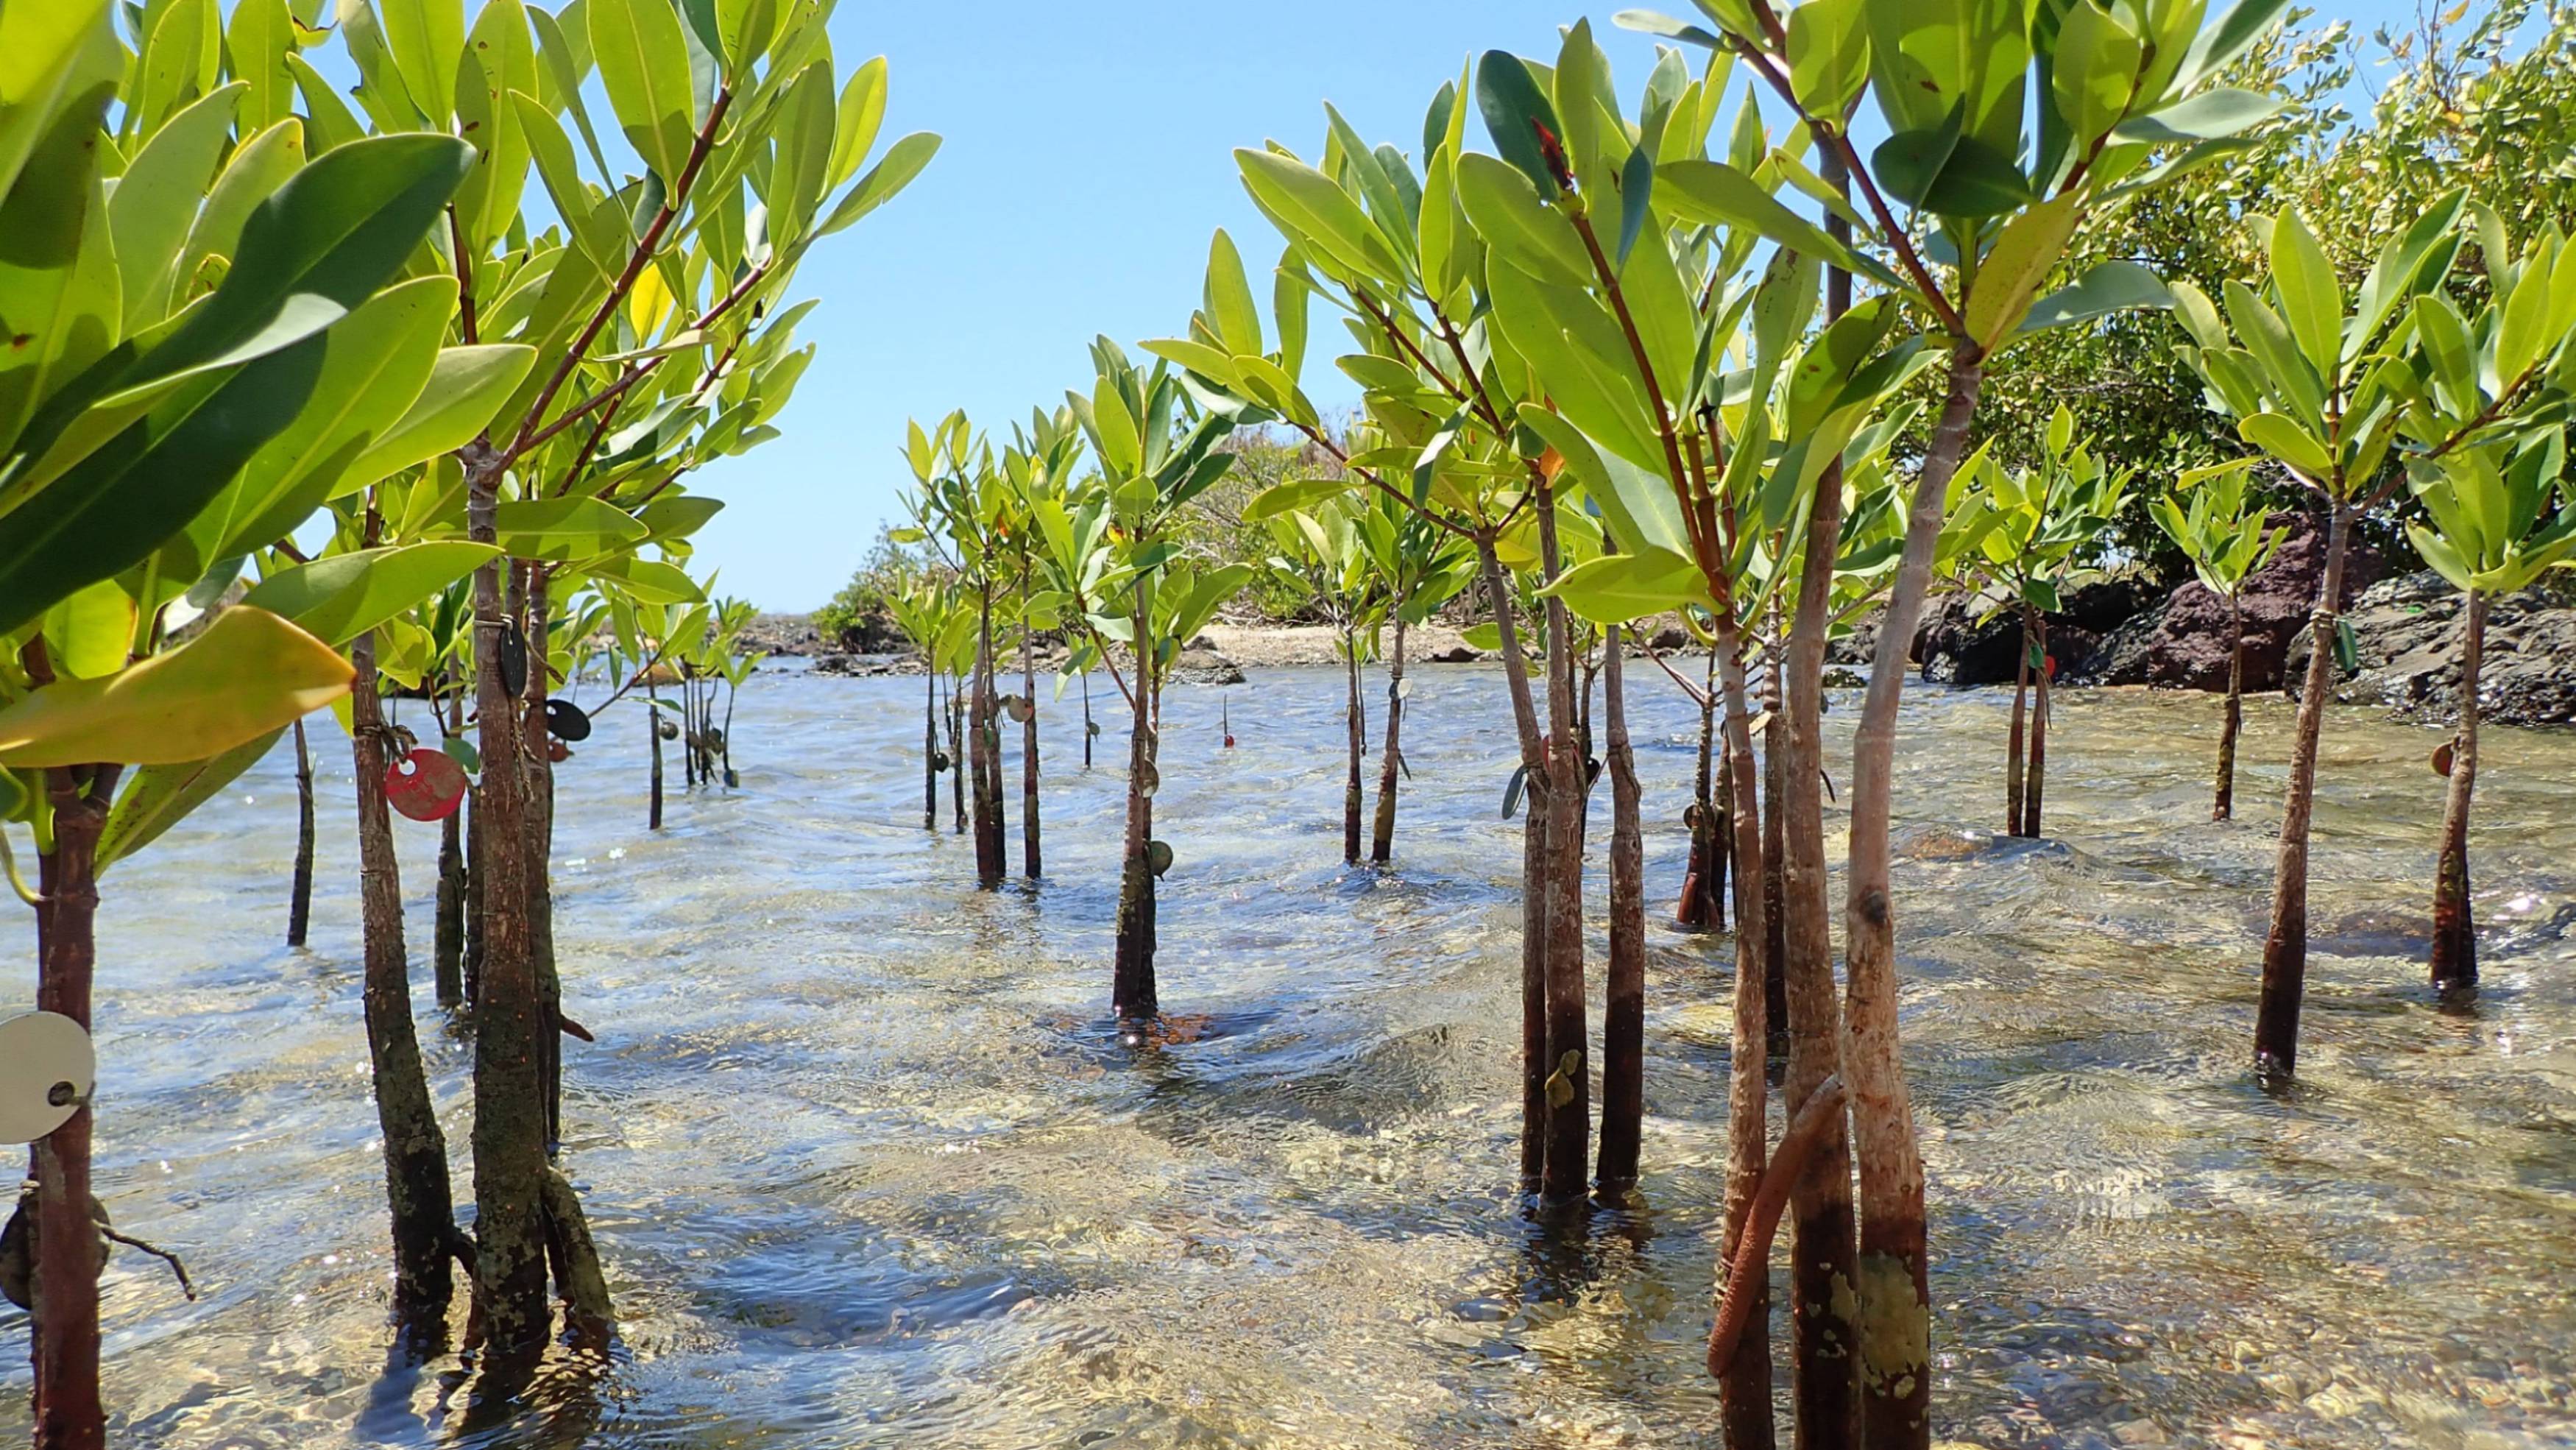 Mangroves planted along the coastline